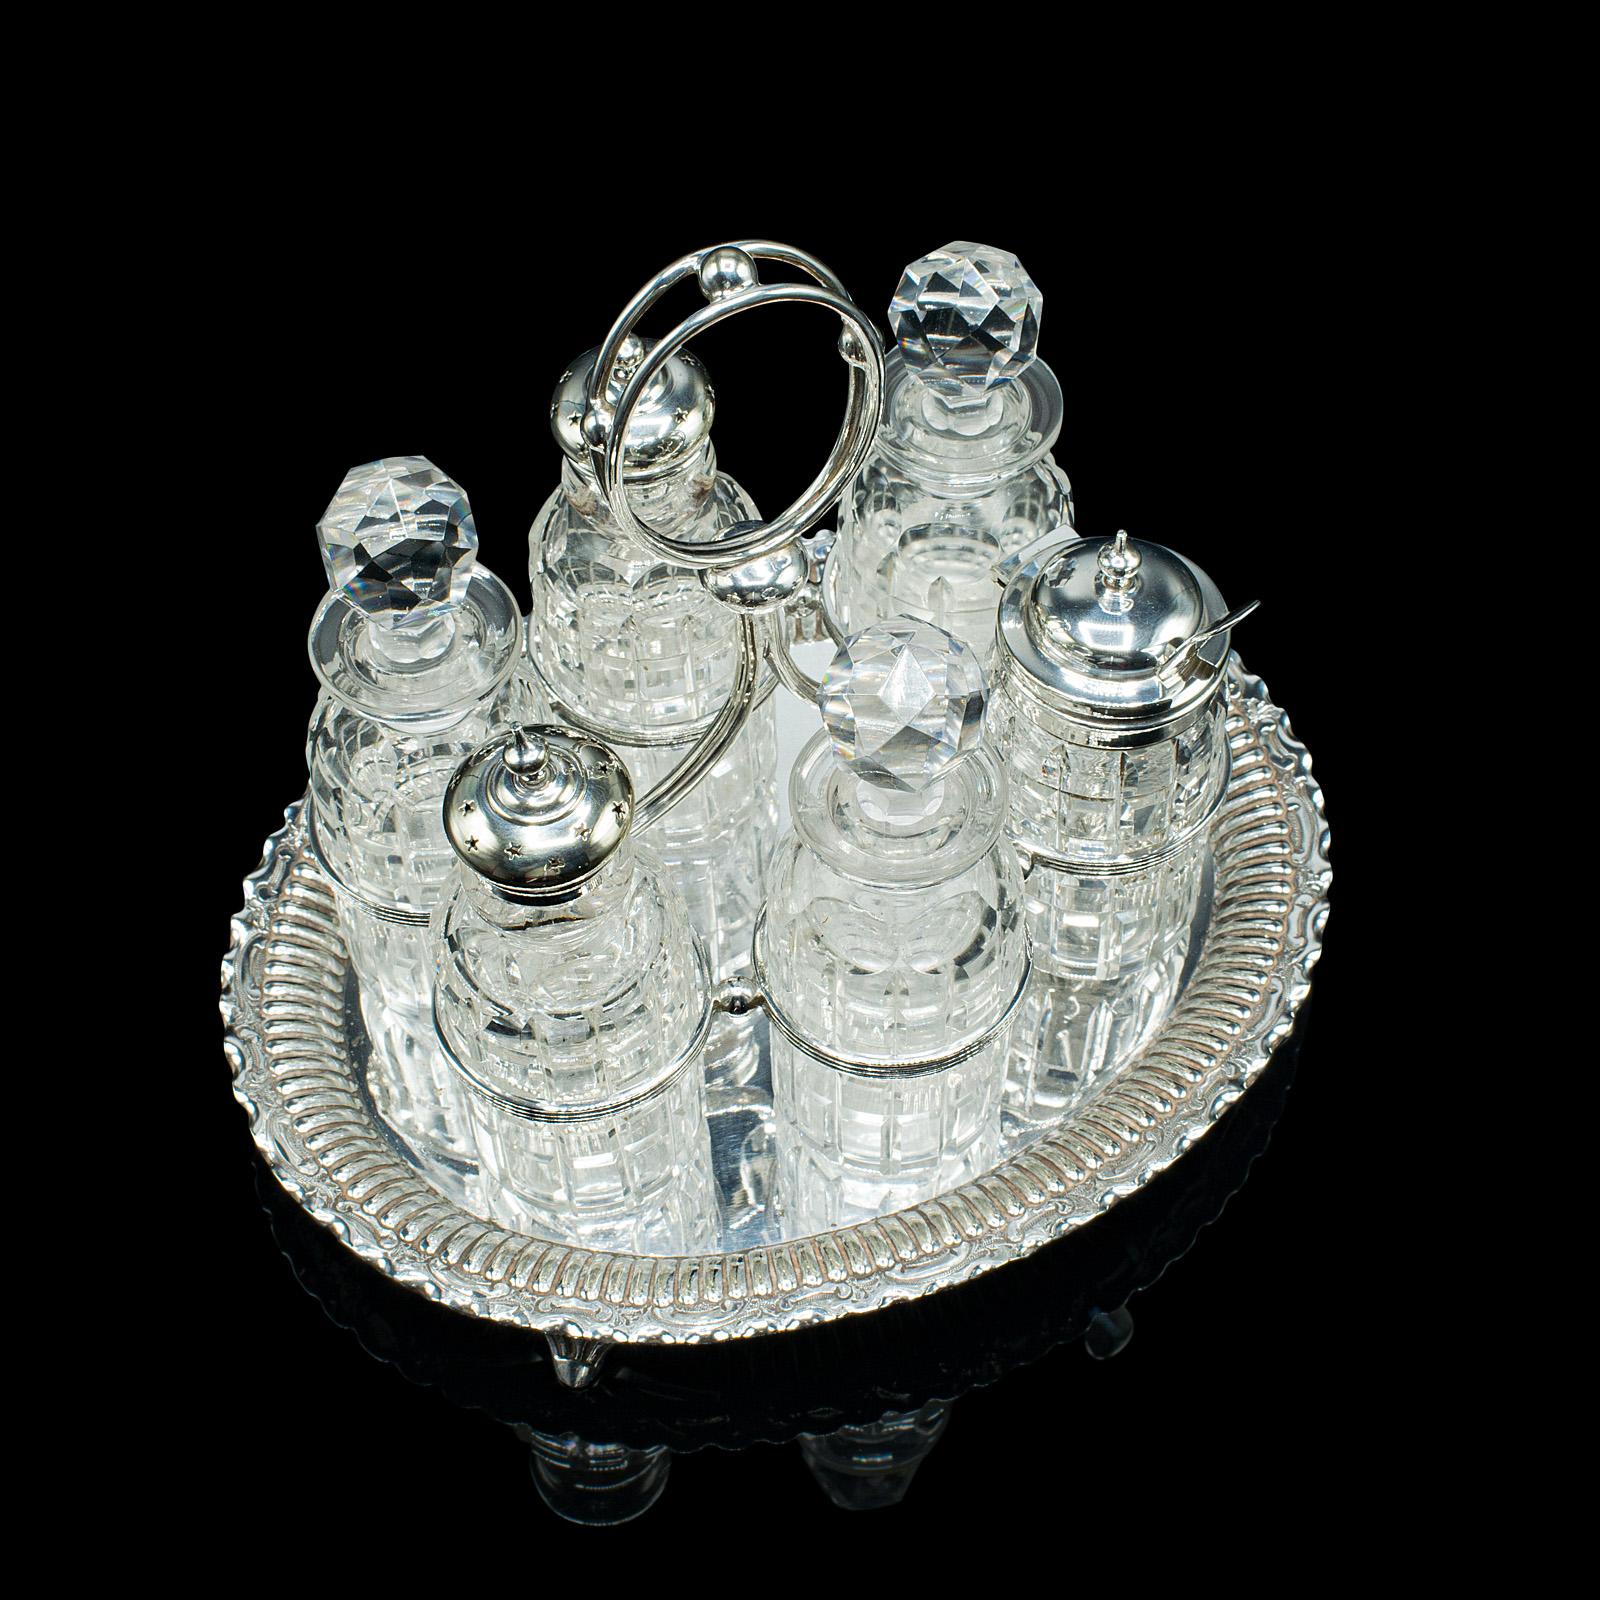 British Antique Table Condiment Set, English, Silver Plate, Glass, Cruet, Victorian